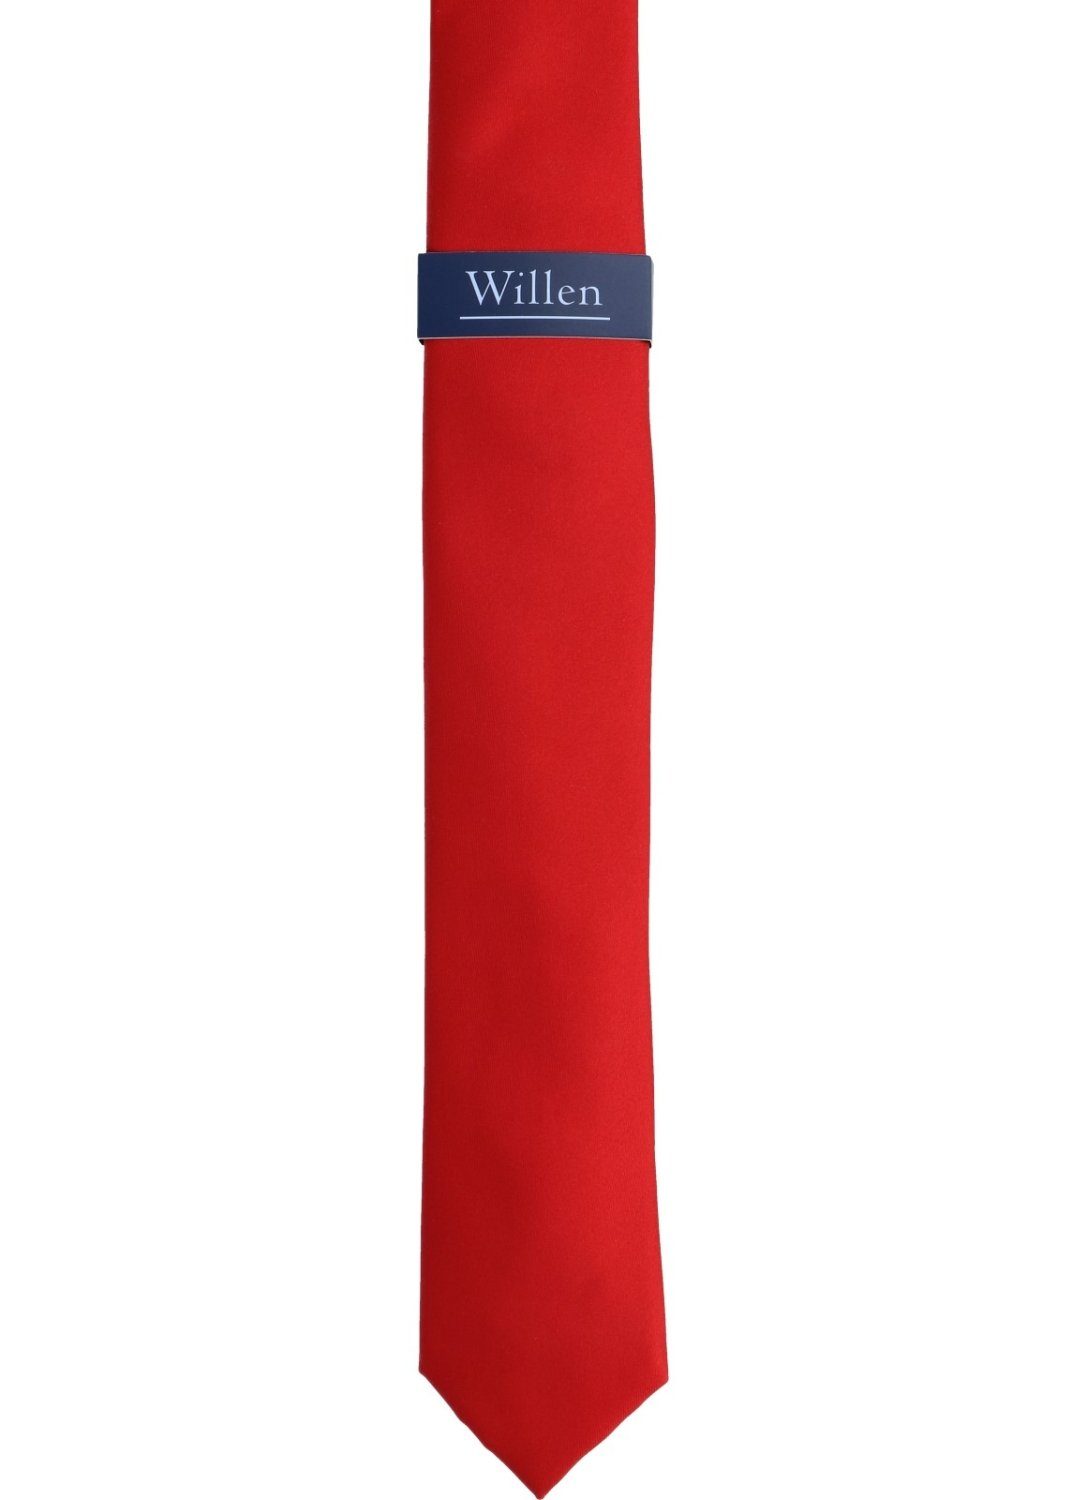 WILLEN Krawatte Krawatte rot Willen